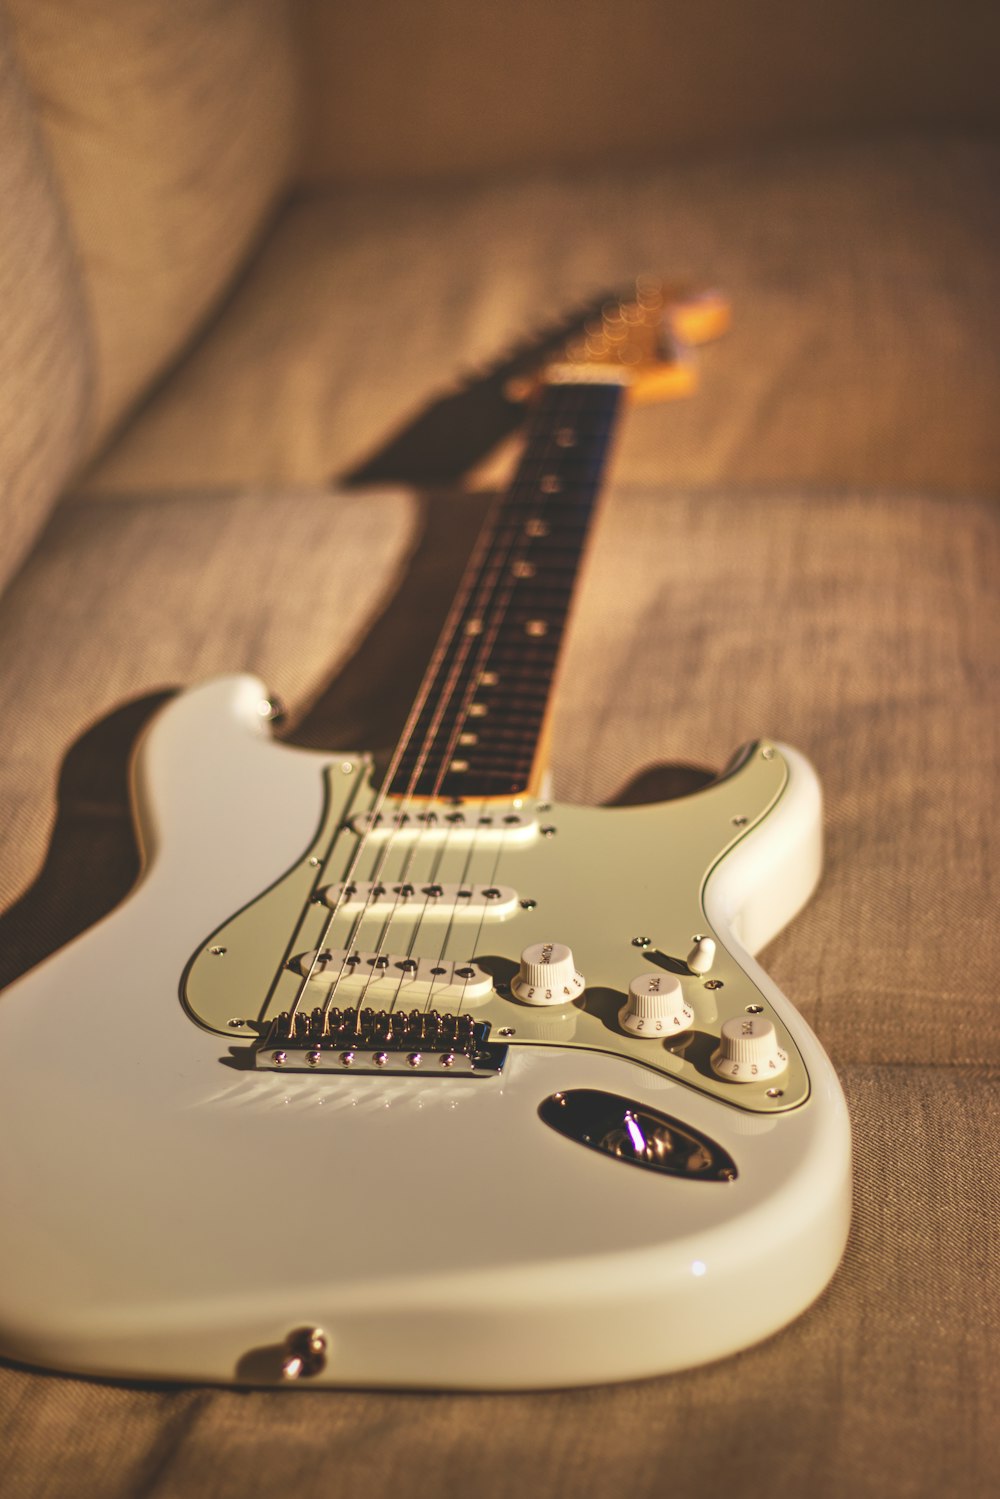 Chitarra elettrica Stratocaster bianca e nera